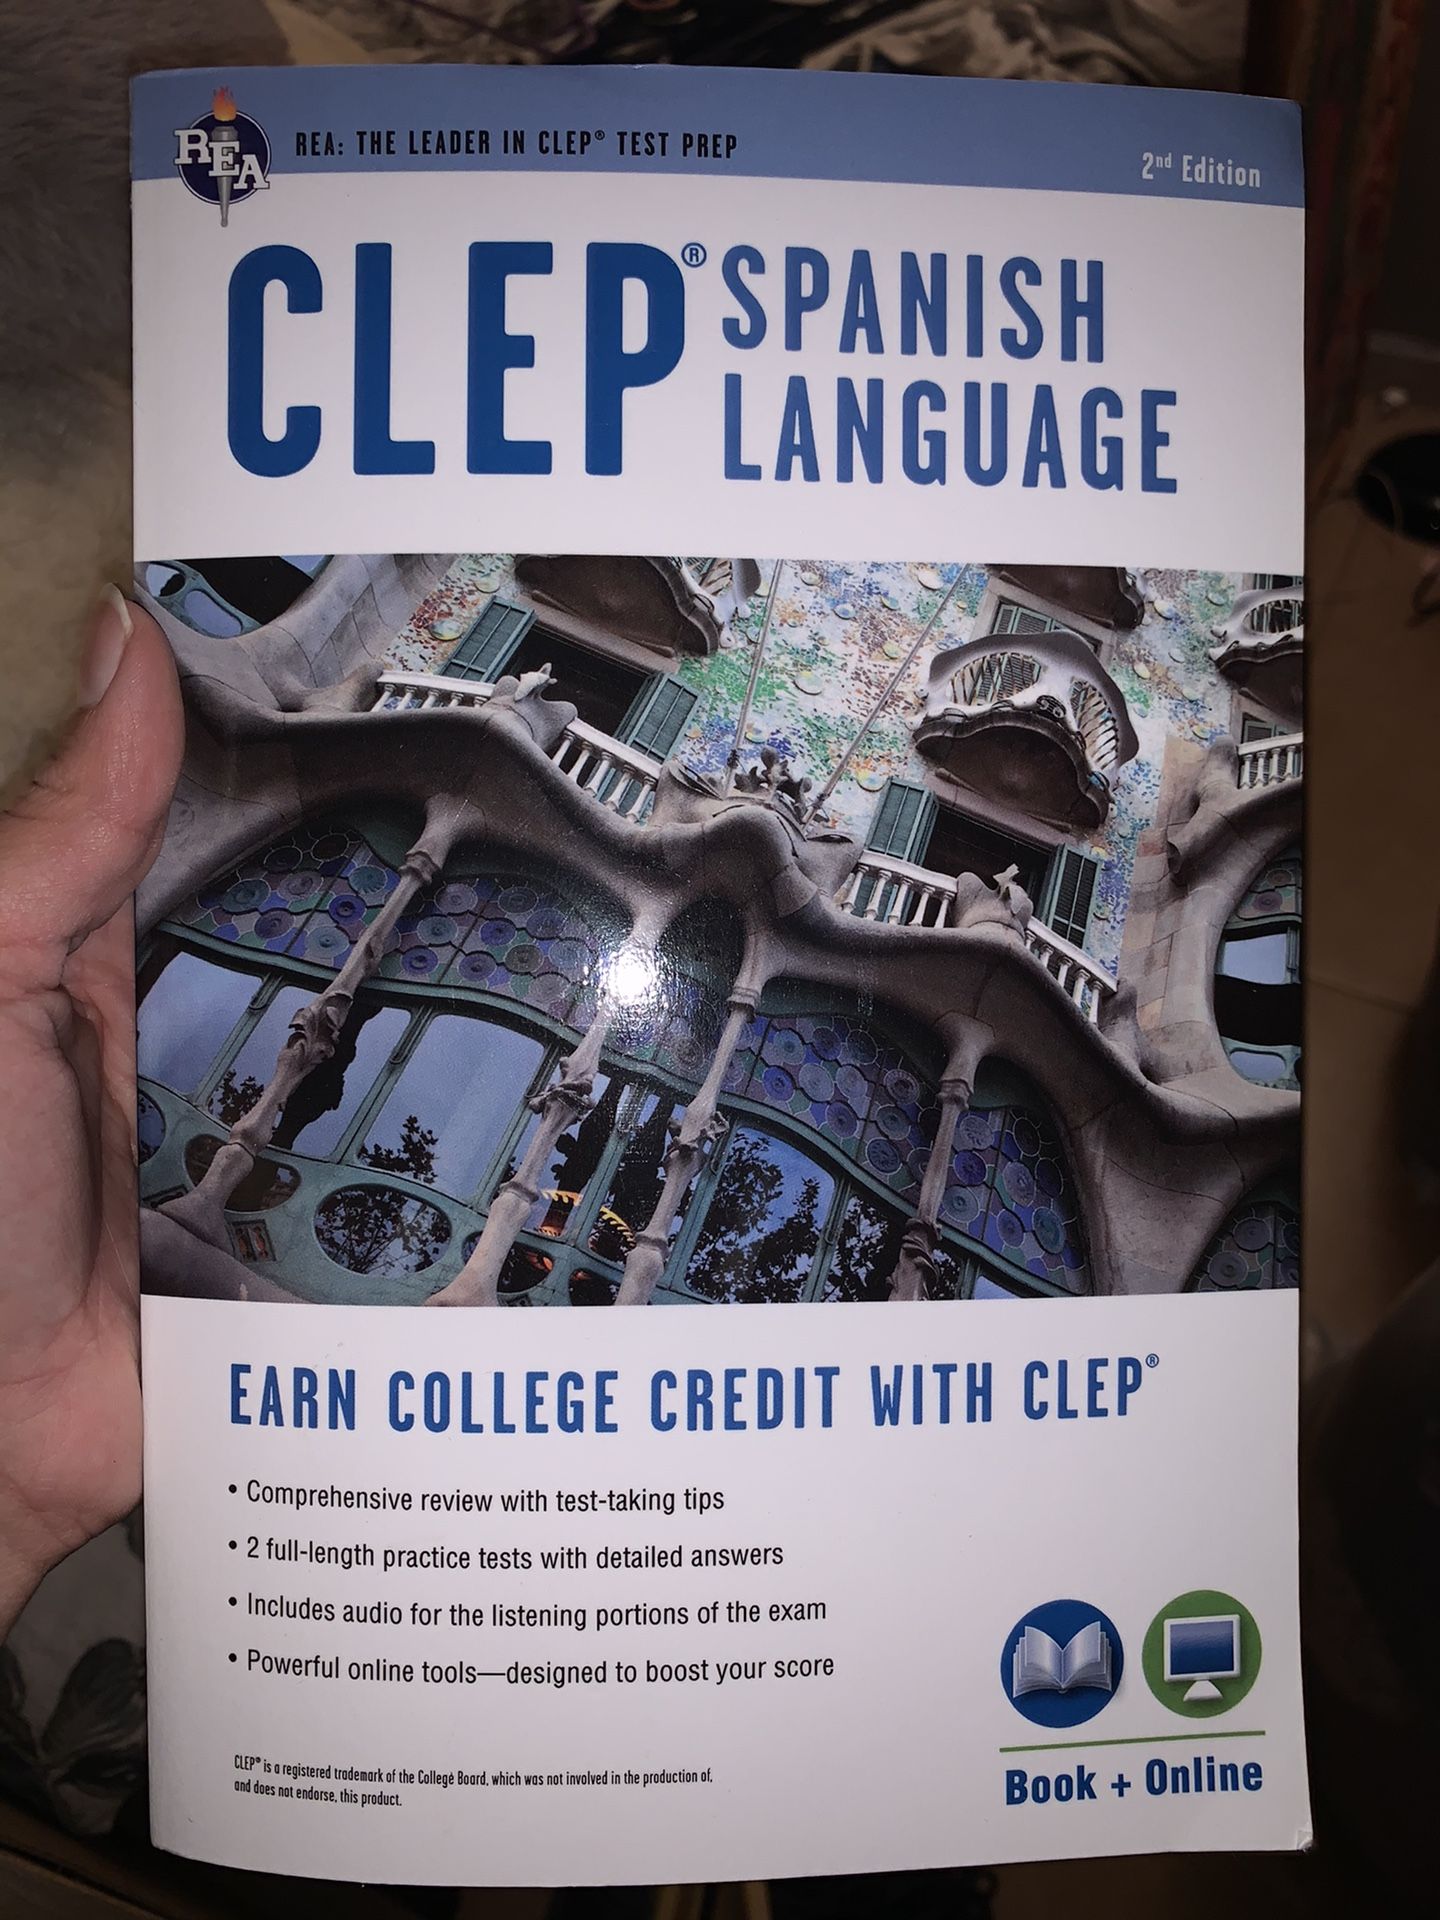 CLEP Spanish Language textbook